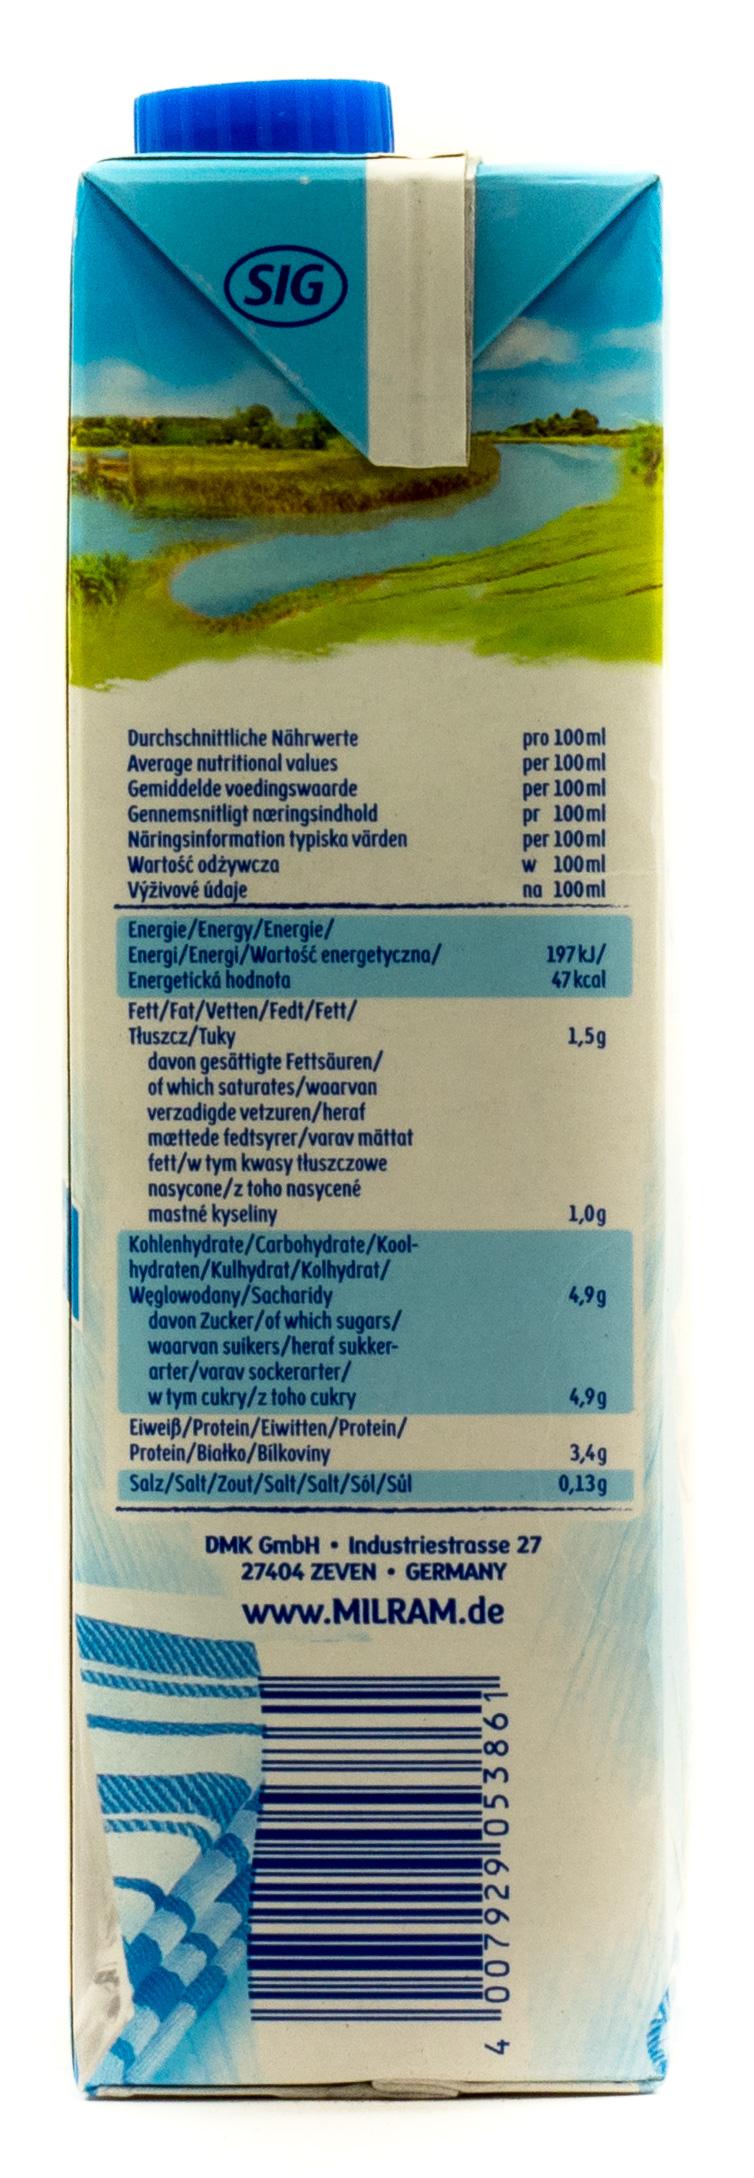 Milram haltbare fettarme Milch 1,5% Fett Karton 12 x 1 l Tetra-Pack